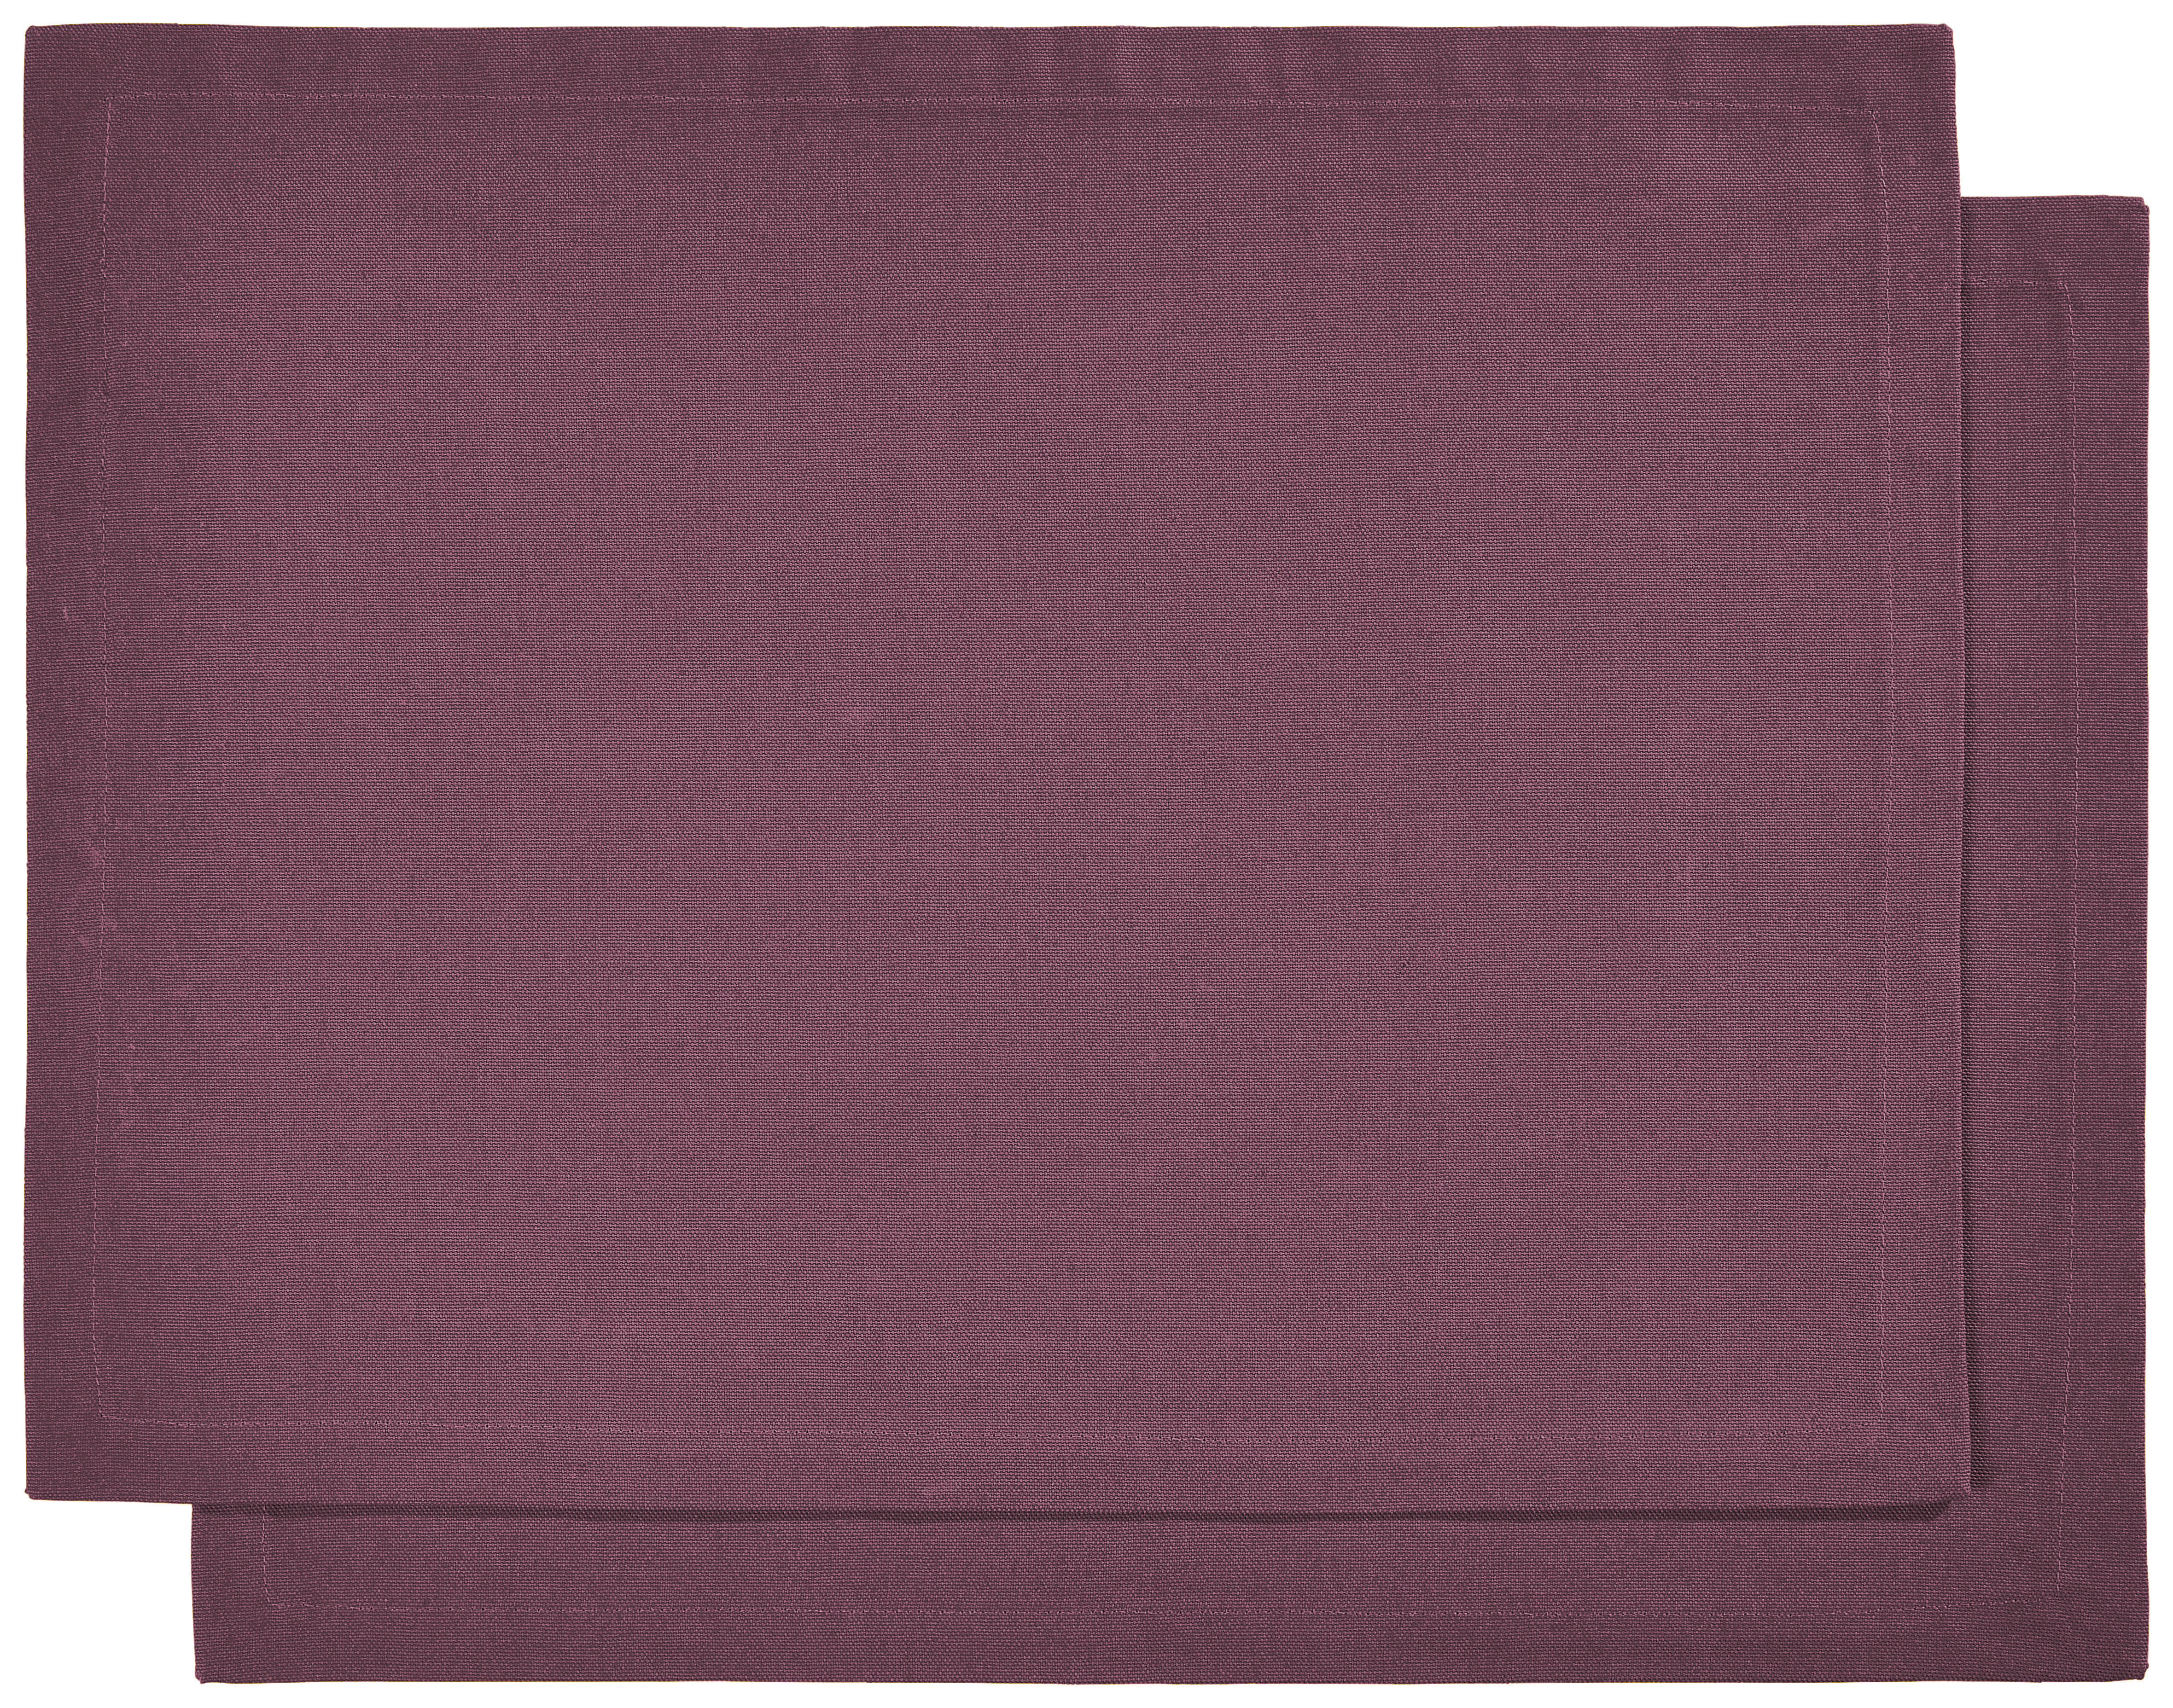 TISCHSET Textil Dunkelrosa 33/45 cm  - Dunkelrosa, Basics, Textil (33/45cm) - Bio:Vio